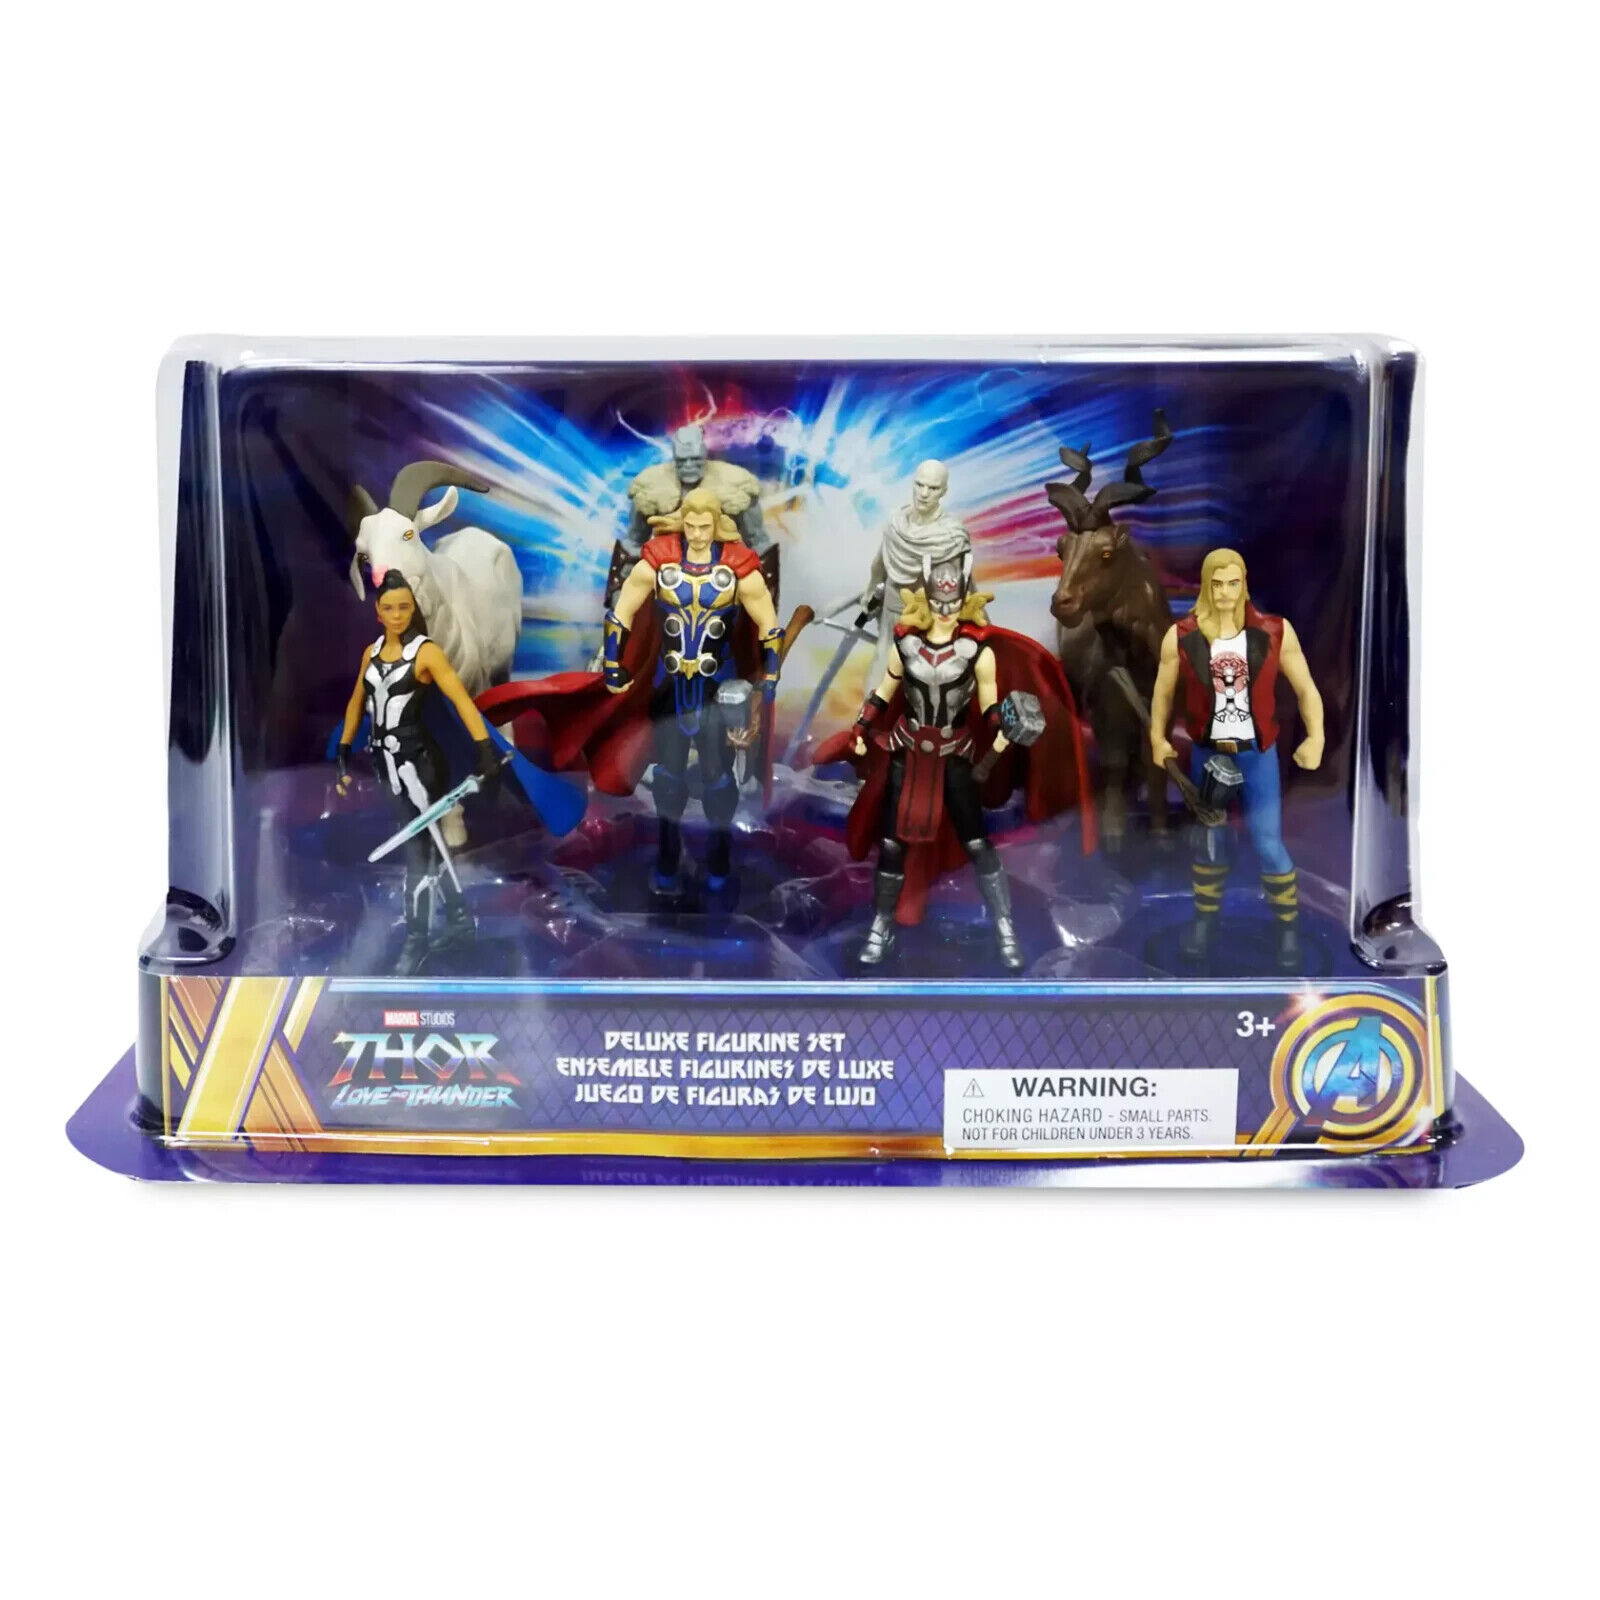 Thor: Love and Thunder Deluxe Figure Set Figurine playset Disney Marvel New